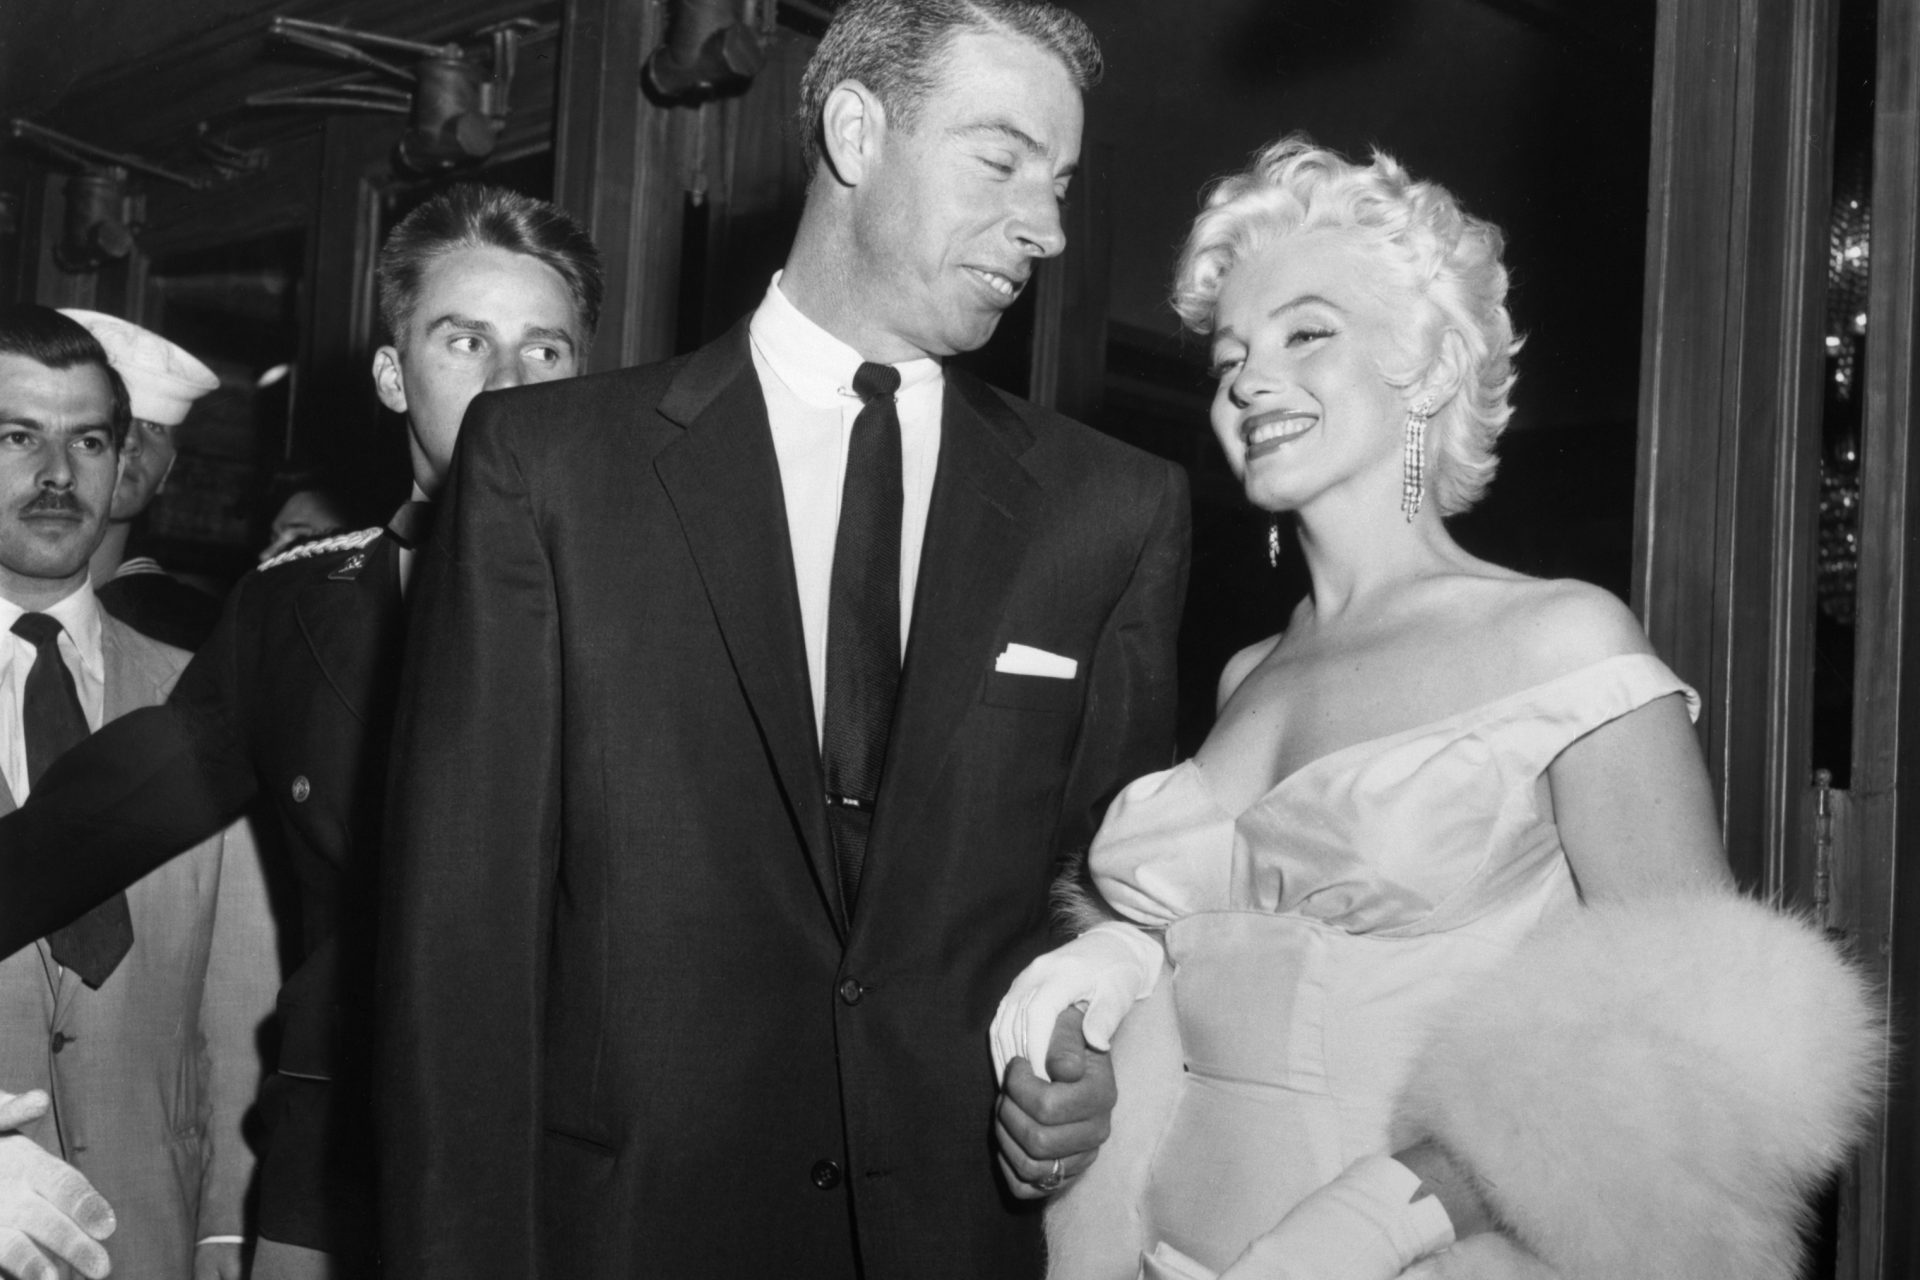 1953 - Marilyn Monroe and Joe DiMaggio